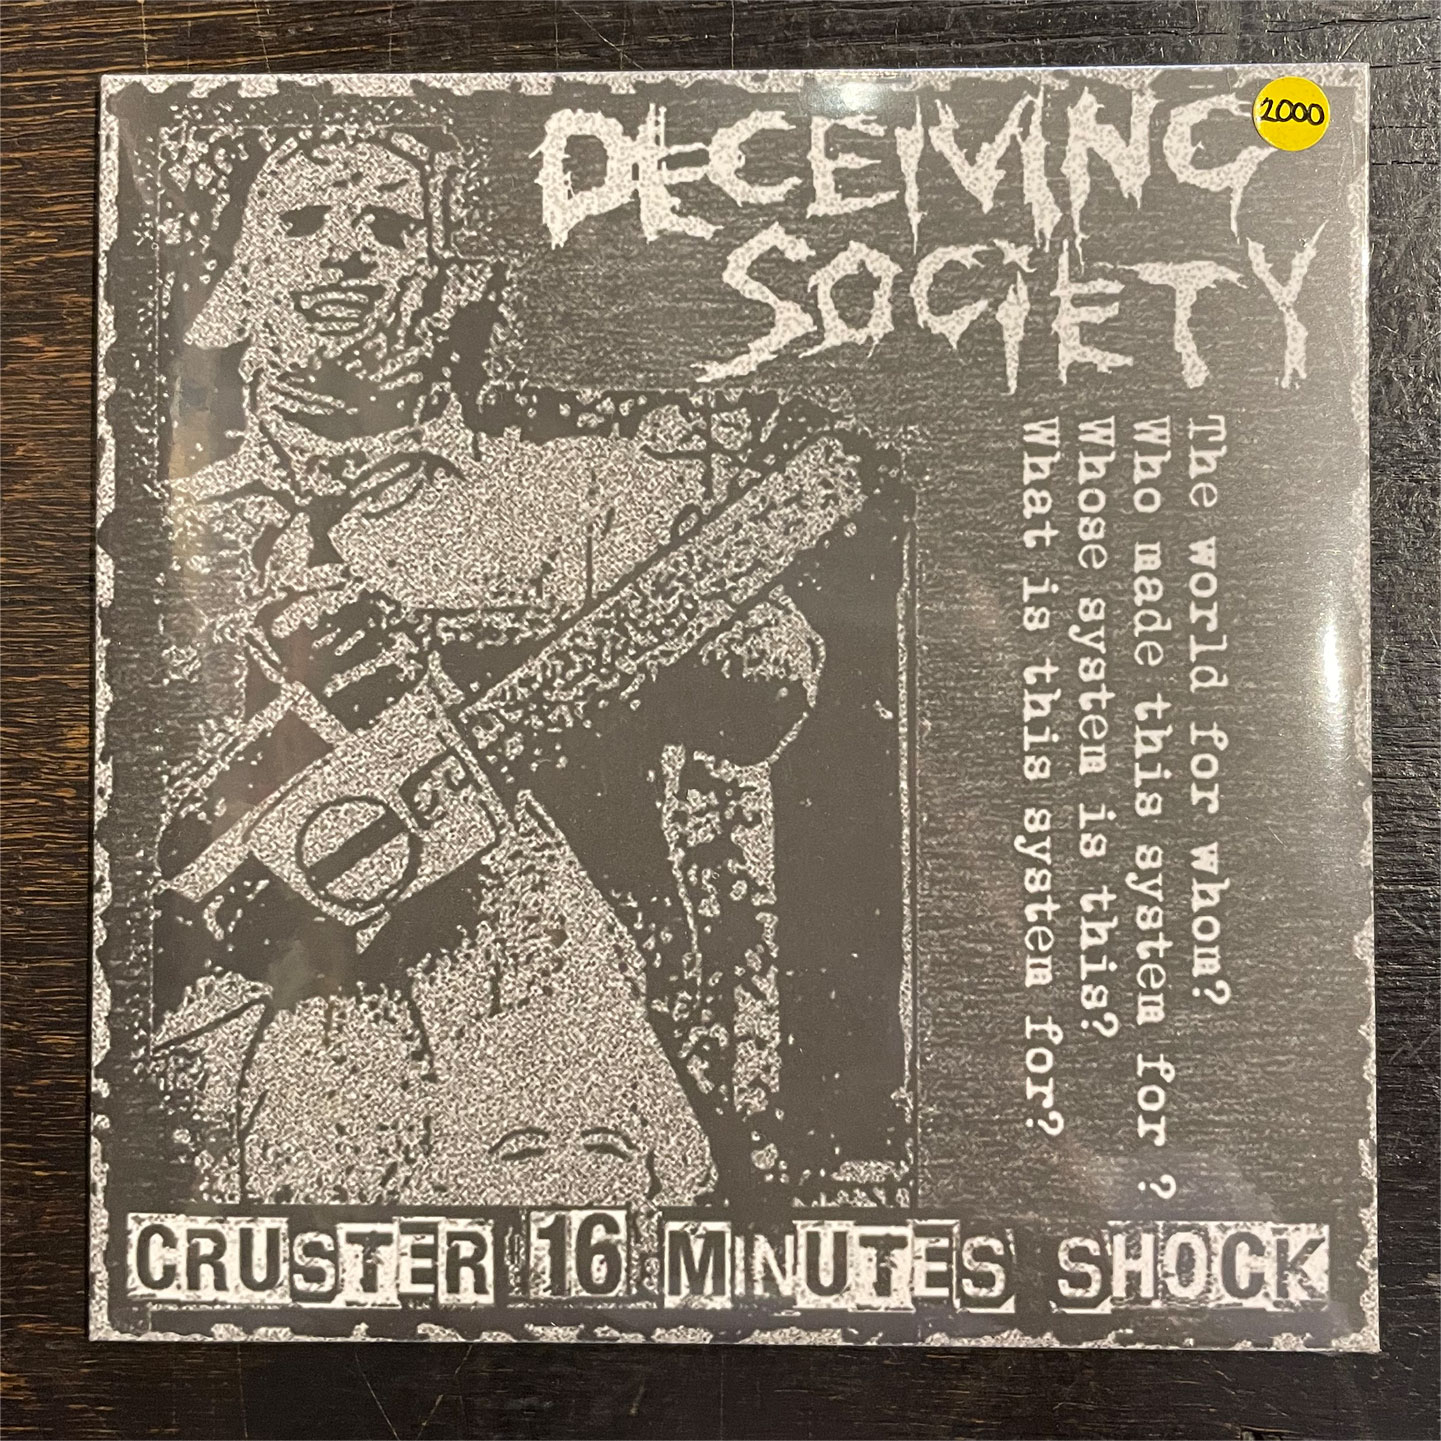 DECEIVING SOCIETY CD CRUSTER 16 MINUTES SHOCK (LTD.500)